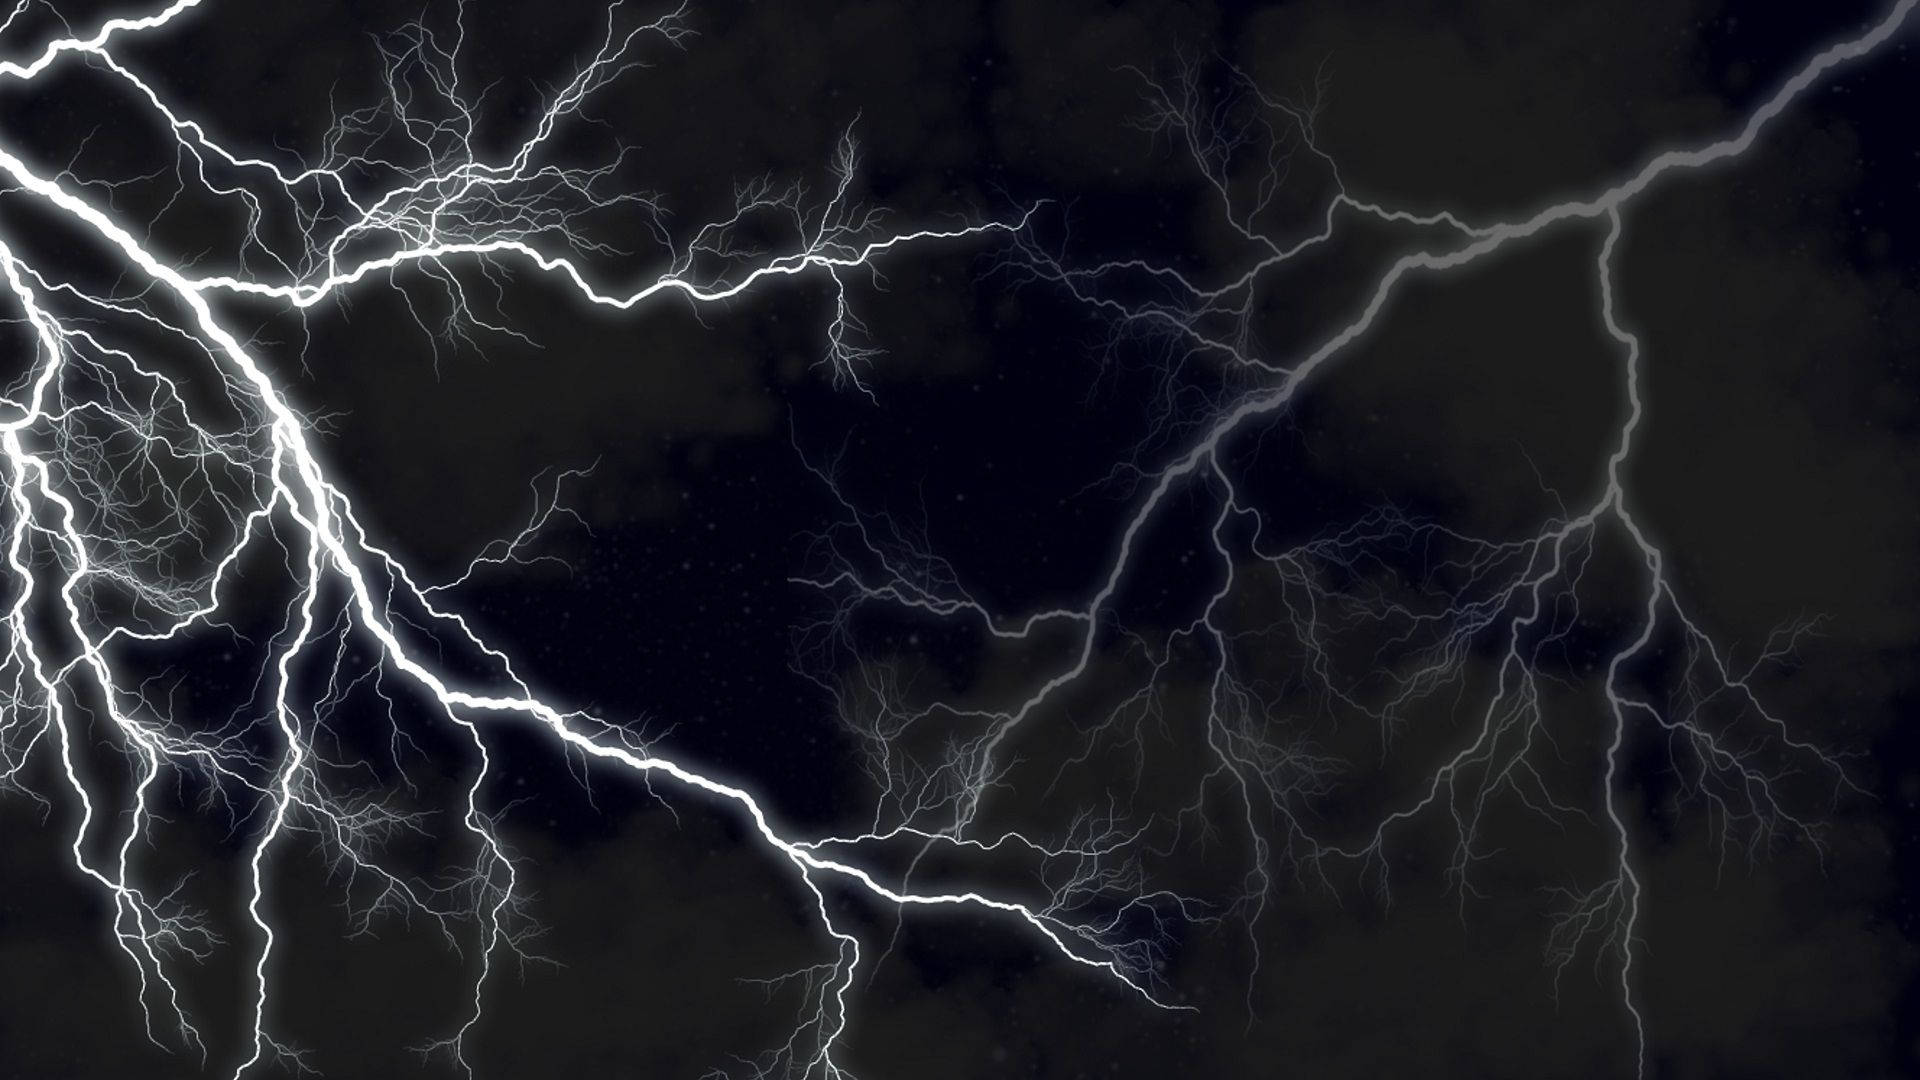 Contrasting Beauty - a bolt of lightning striking through the night sky Wallpaper